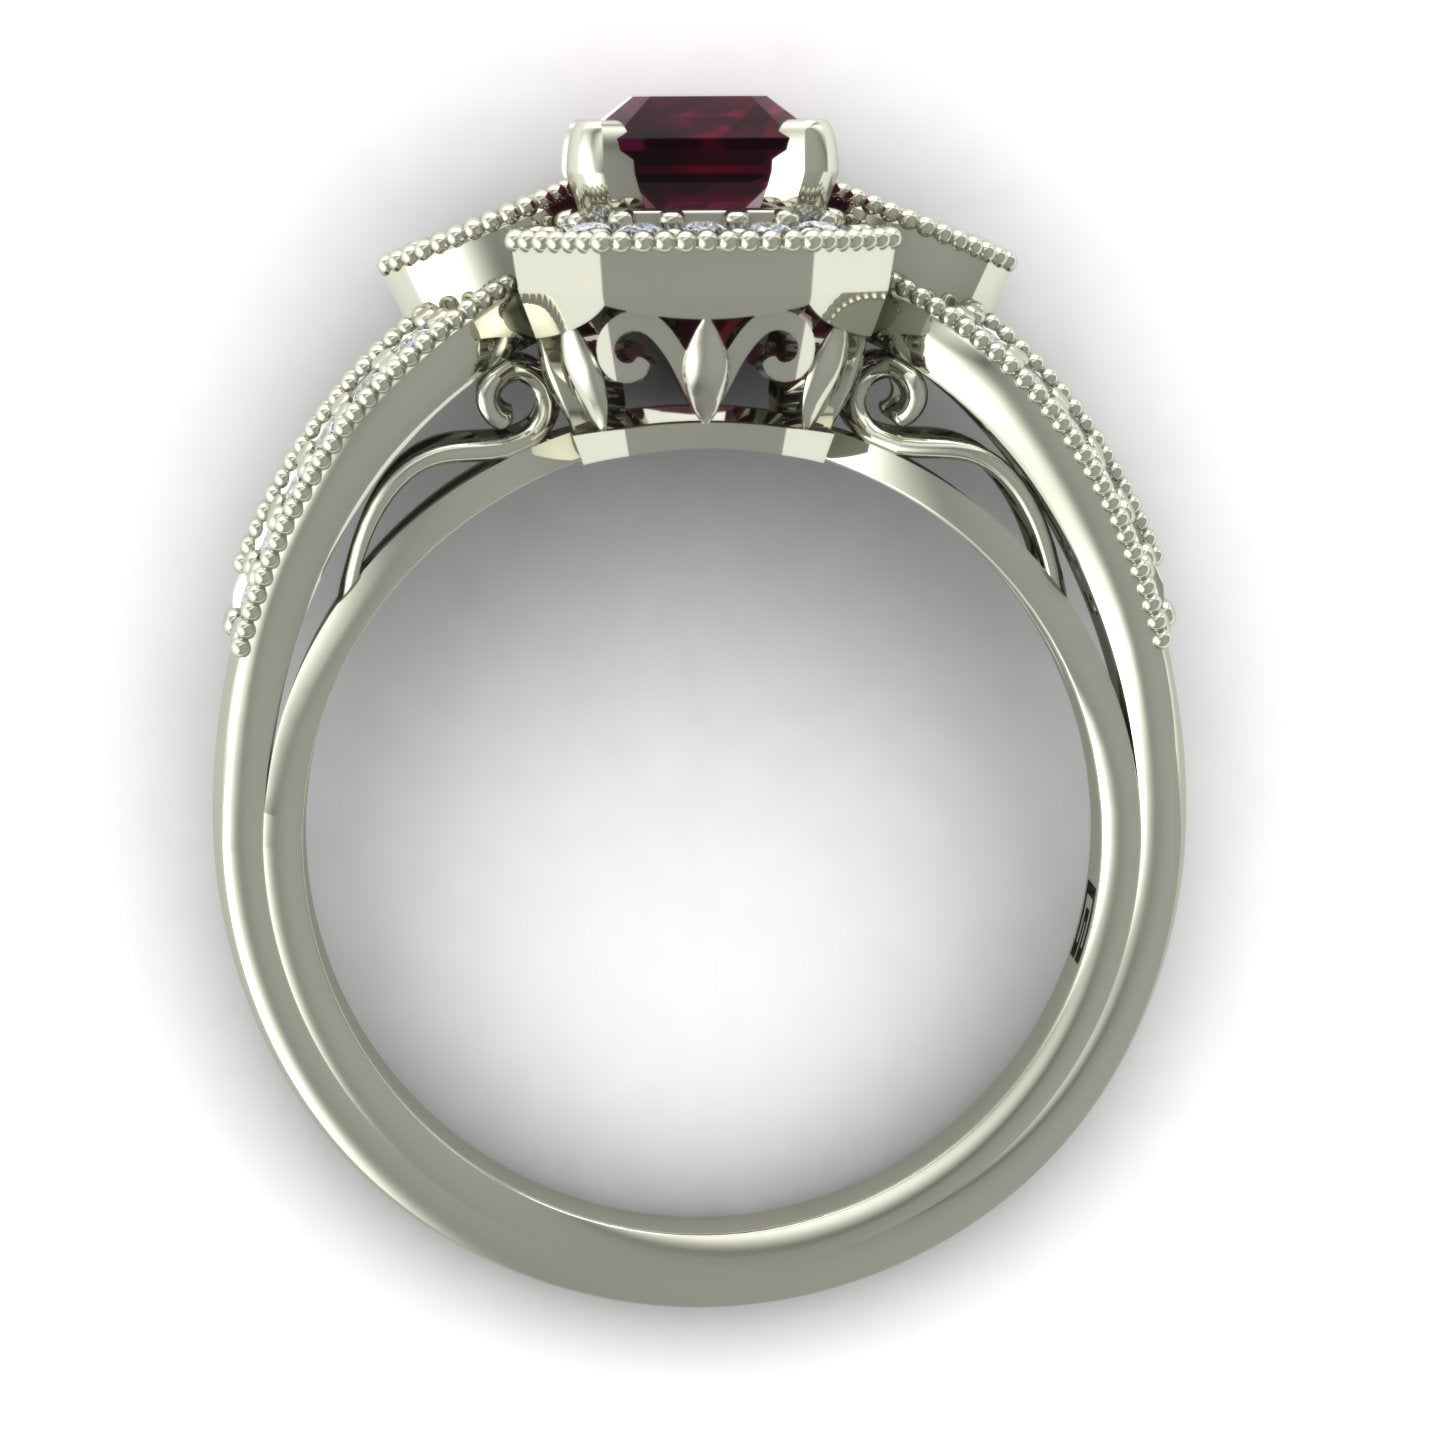 emerald cut rhodolite garnet and diamond art deco inspired ring in 14k white gold - Charles Babb Designs - through finger view